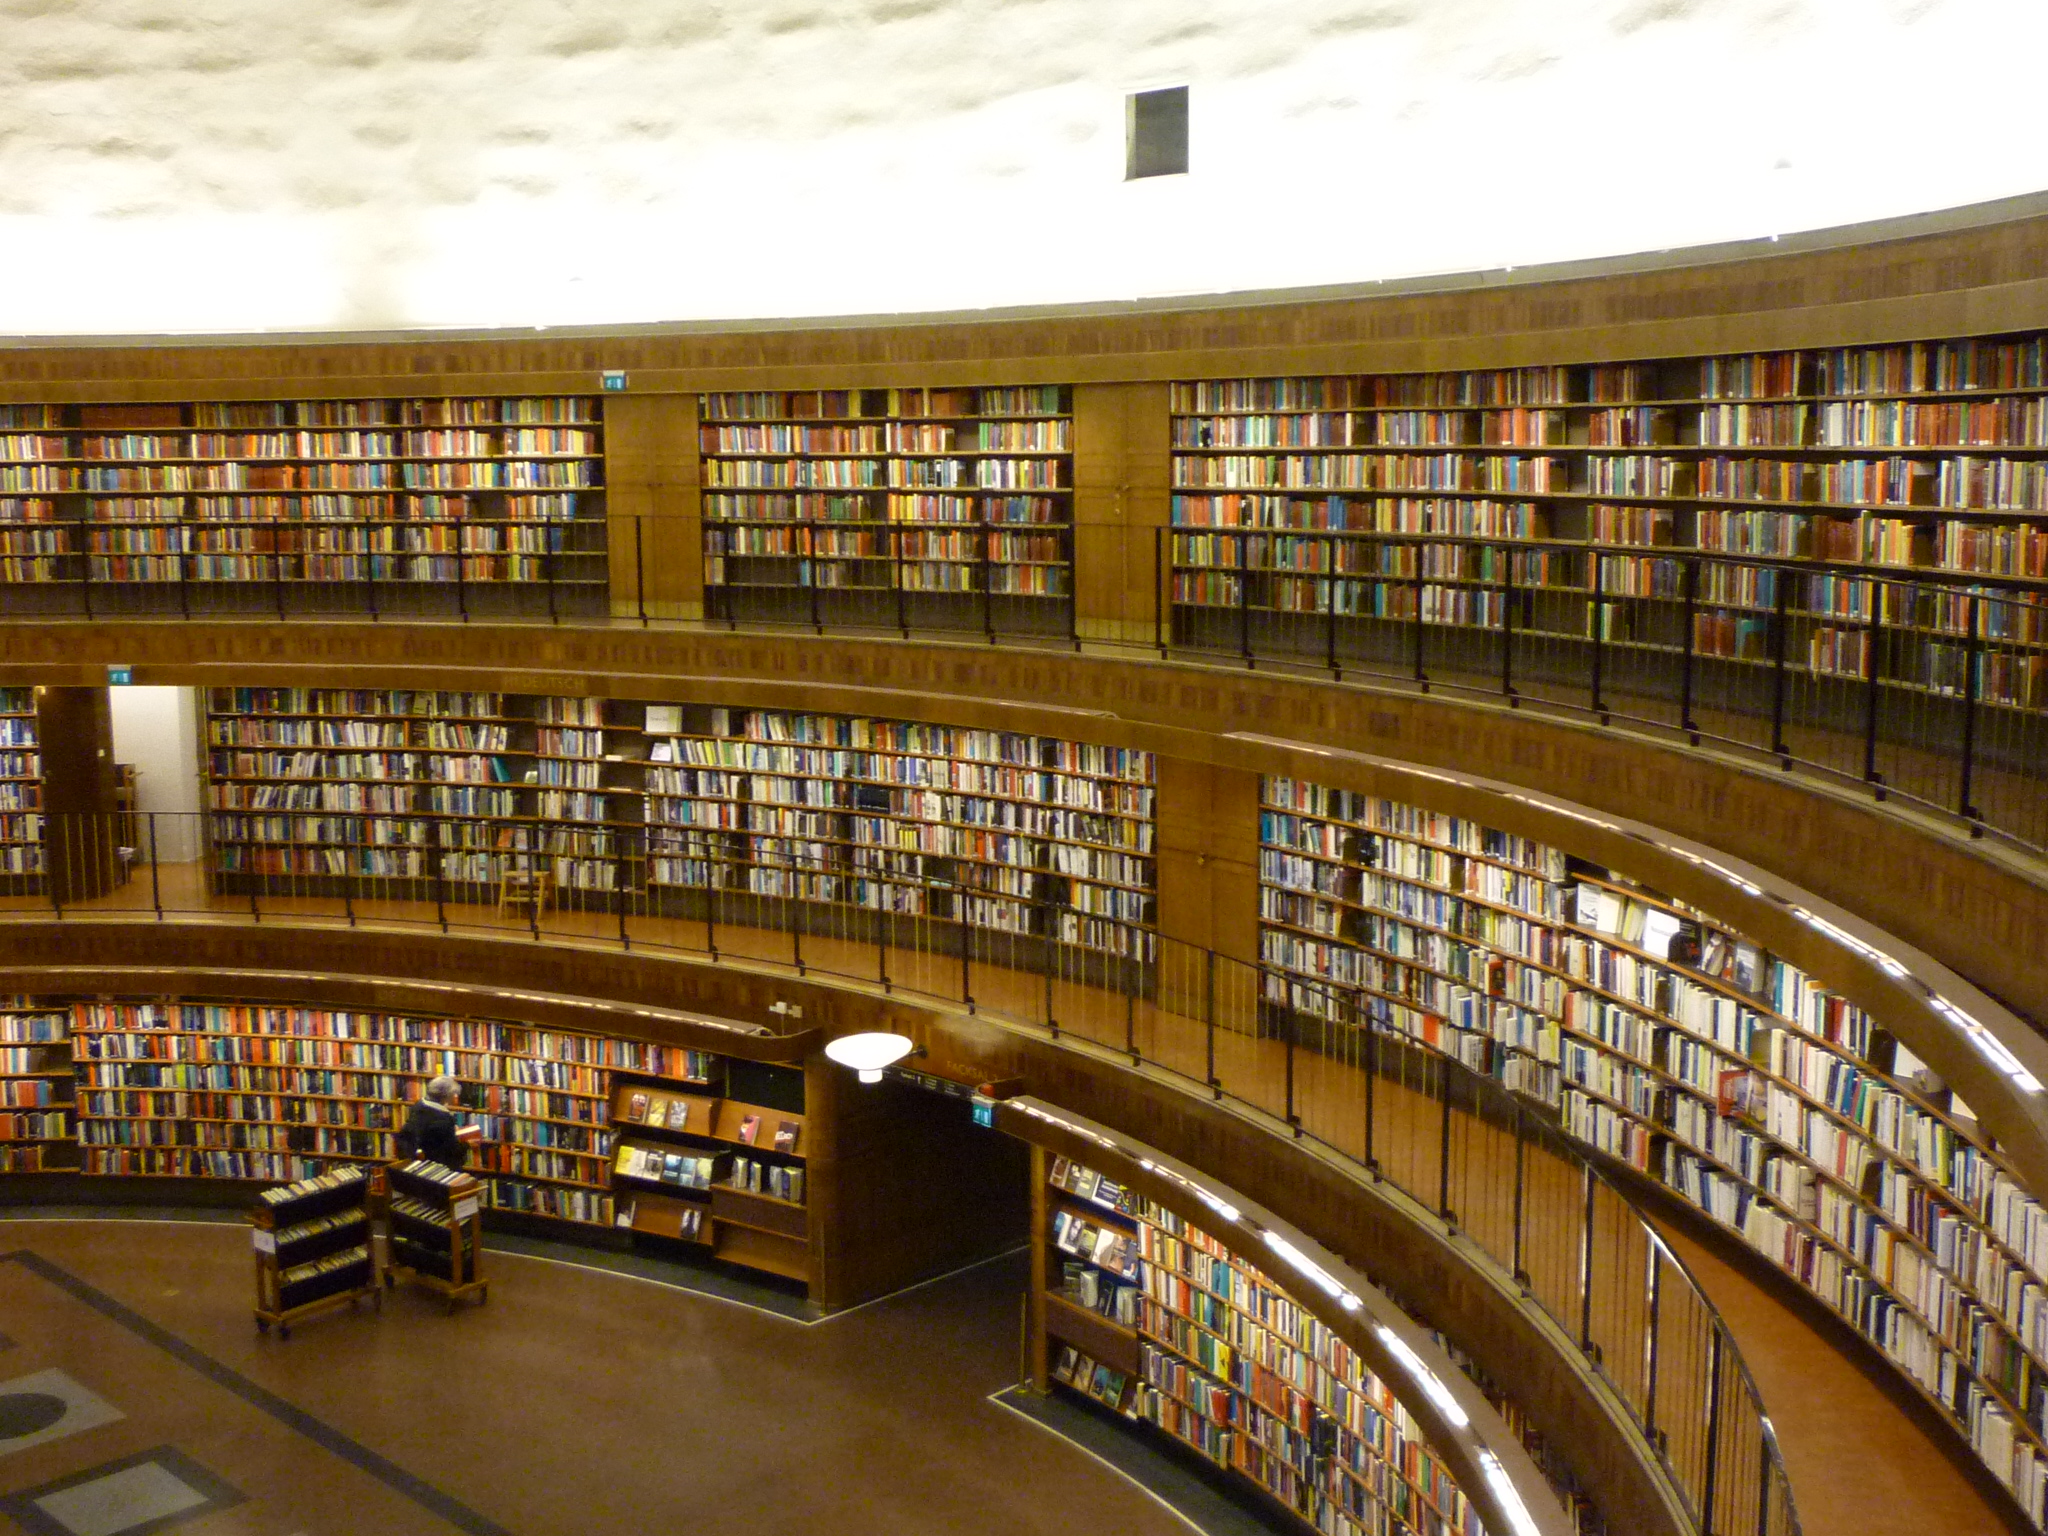 Library 1.8. Лейпциг библиотека. Большая библиотека в Лейпциге. Университет Лейпциг библиотека. Национальная библиотека Германии.